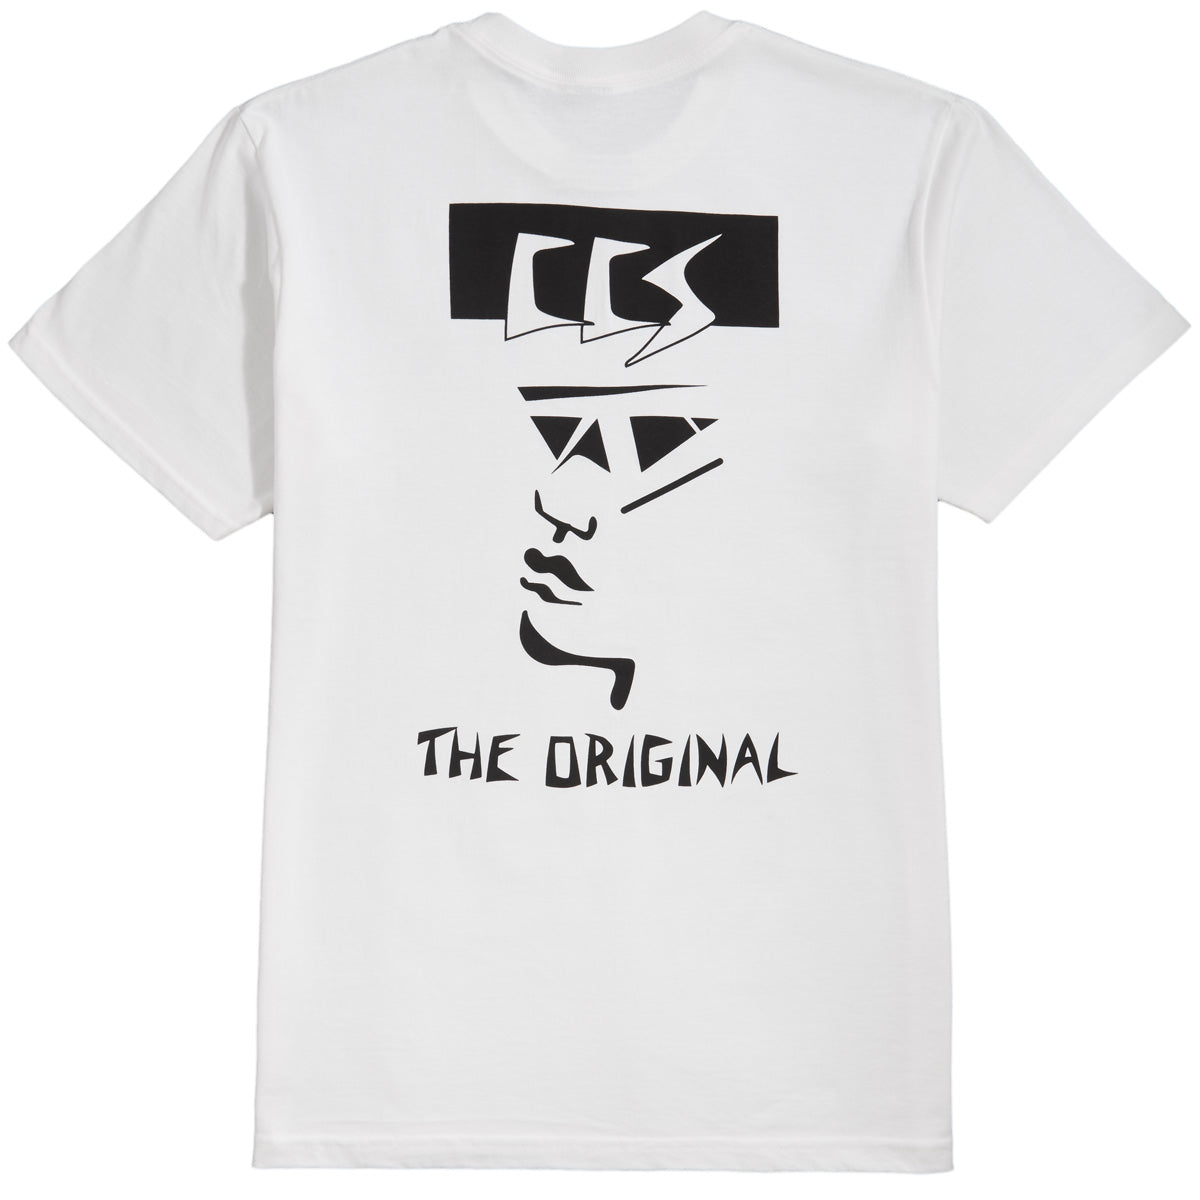 CCS OG Face T-Shirt - White/Reflective Black image 1